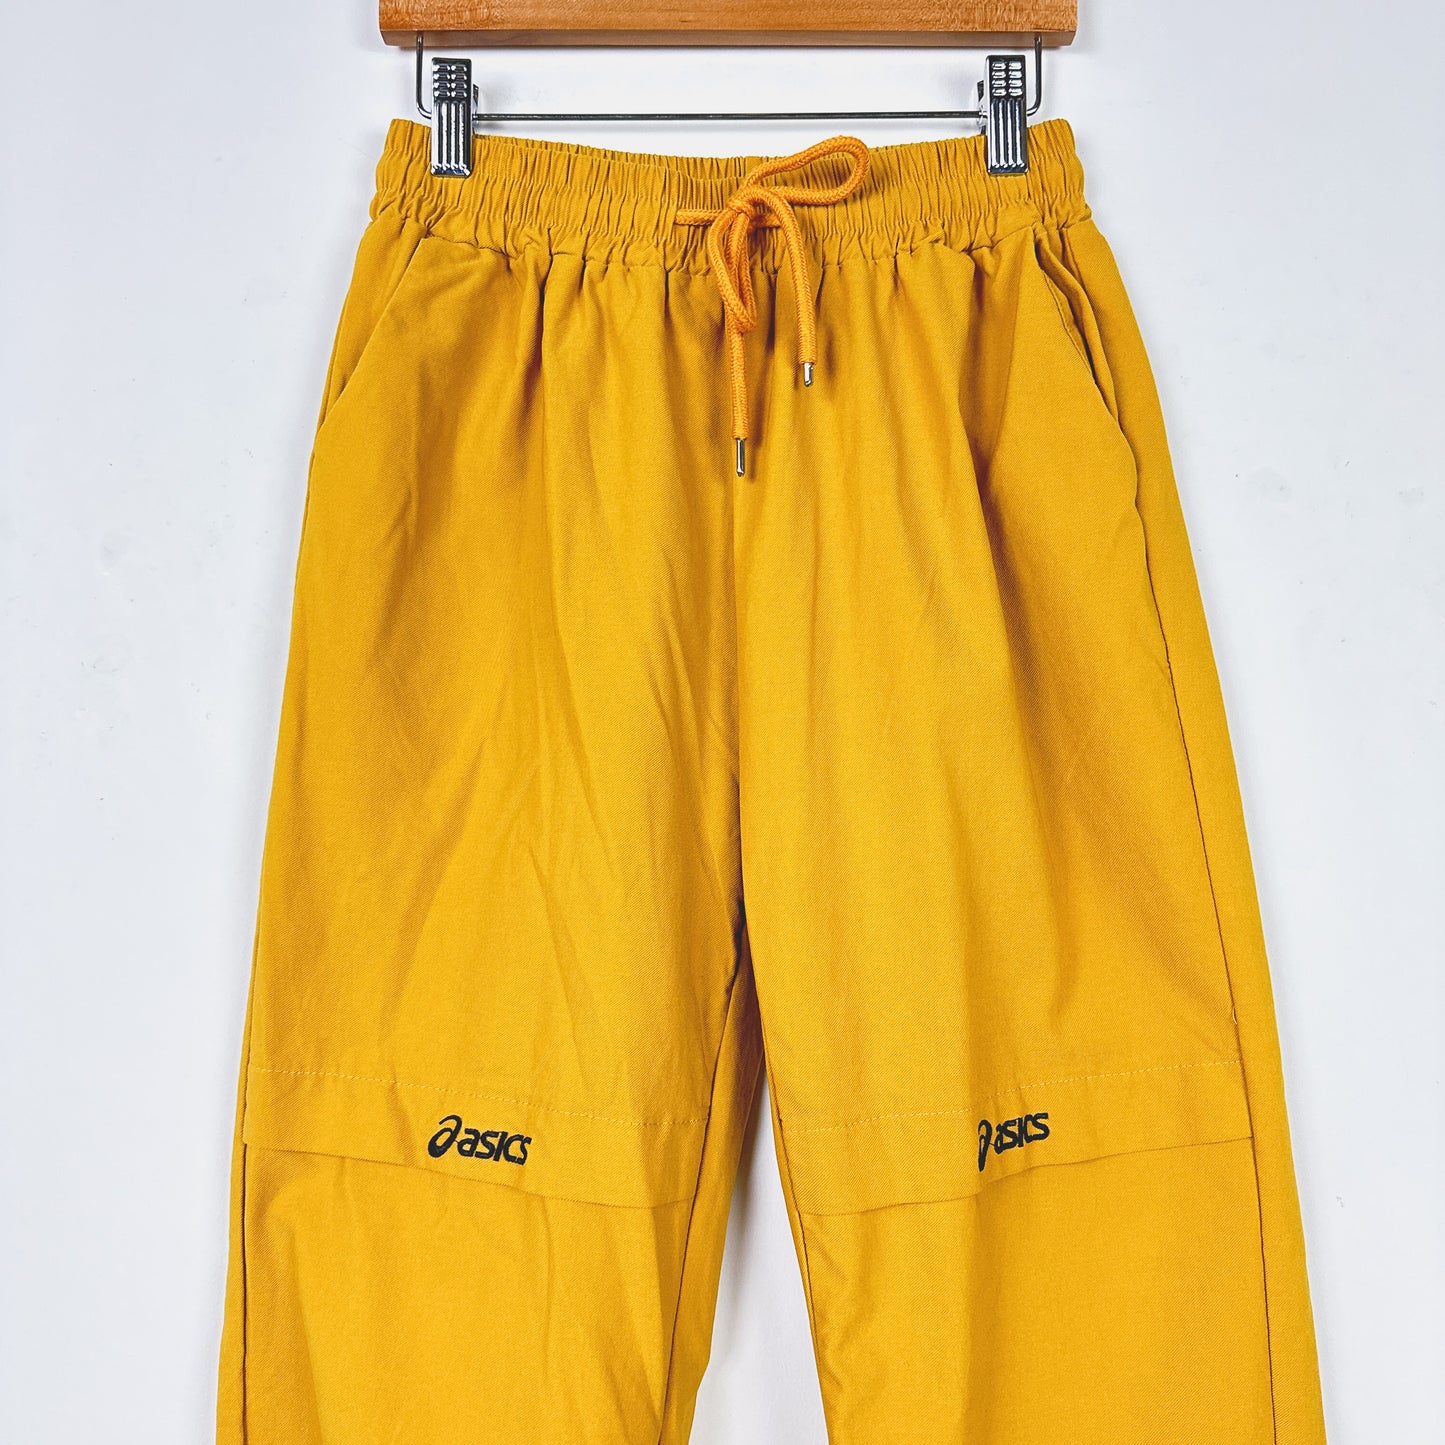 Asics Track Pants - Size 7-8yr